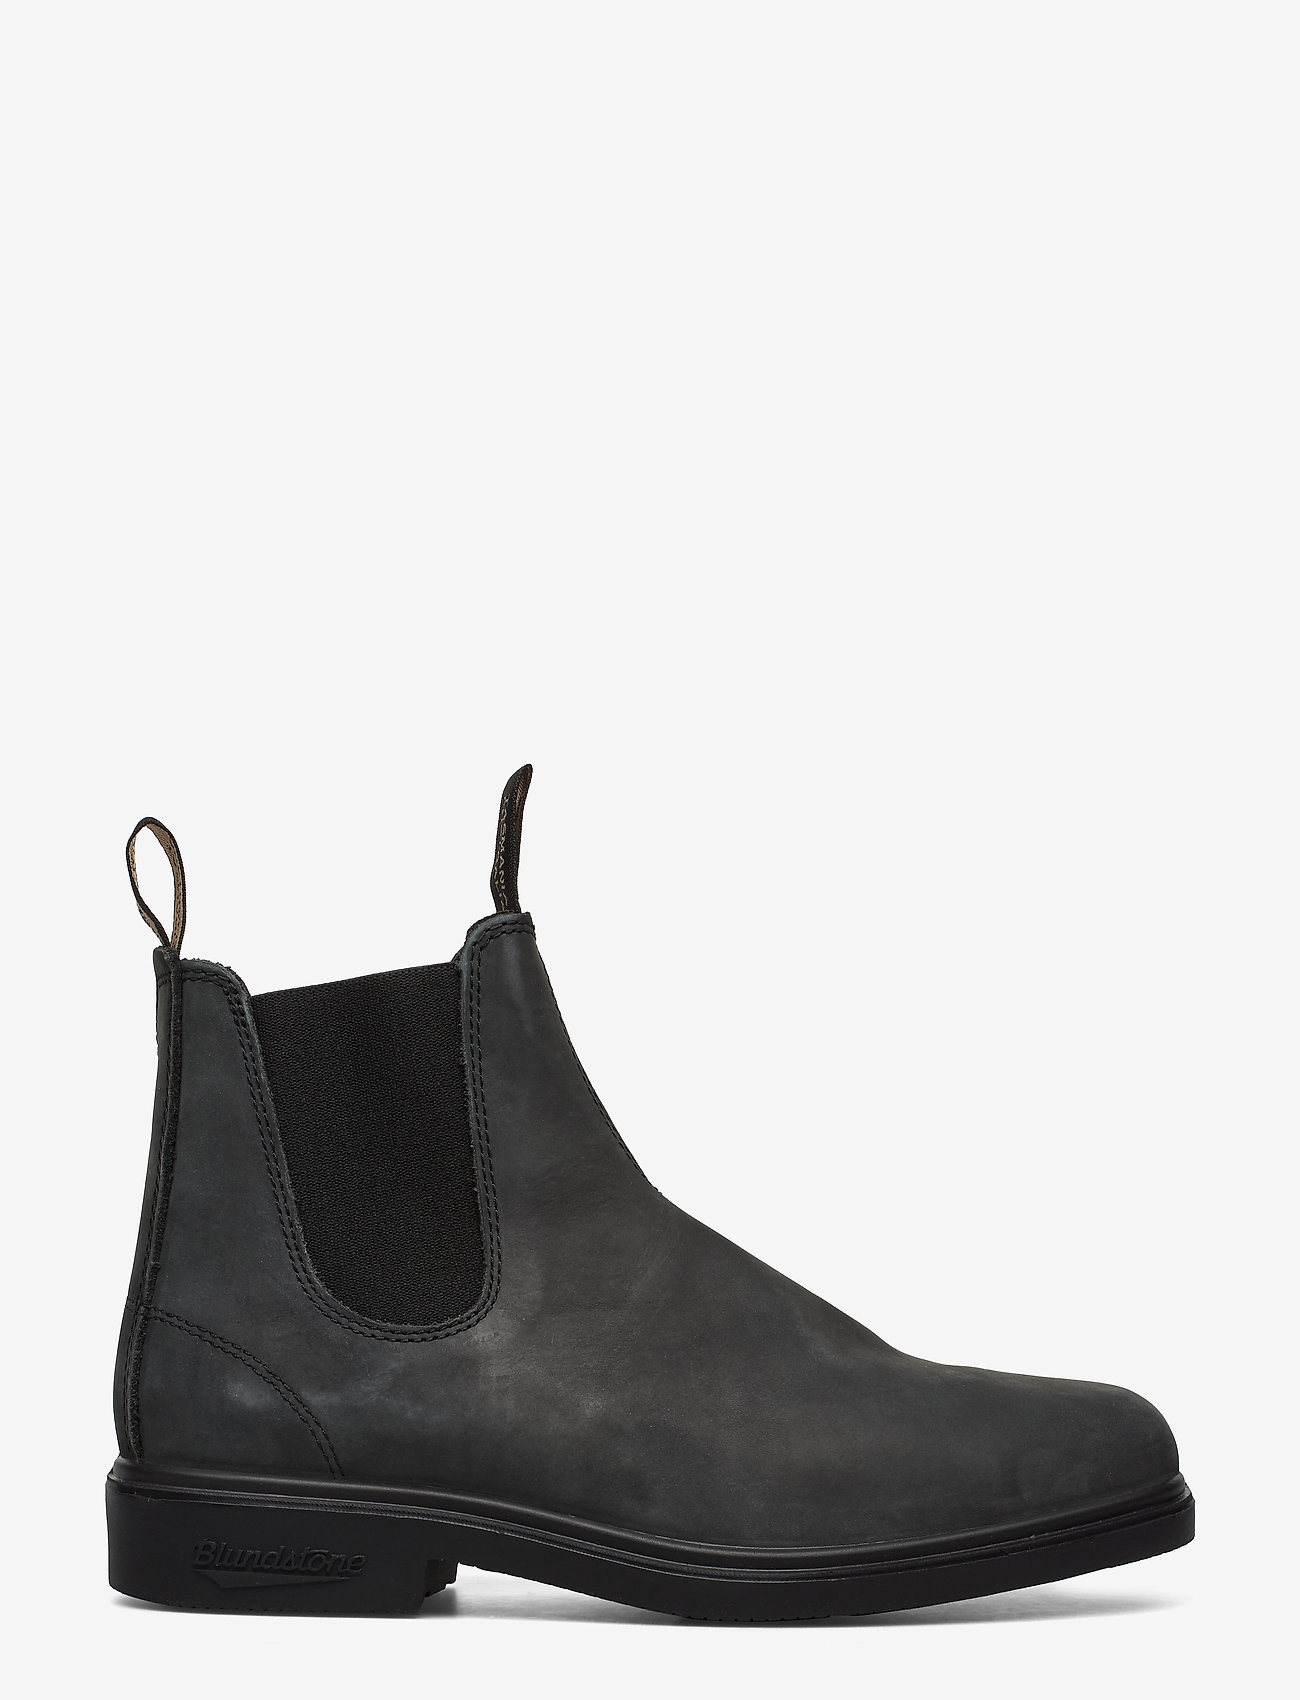 Bl Dress Boots (Rustic Black) (205 